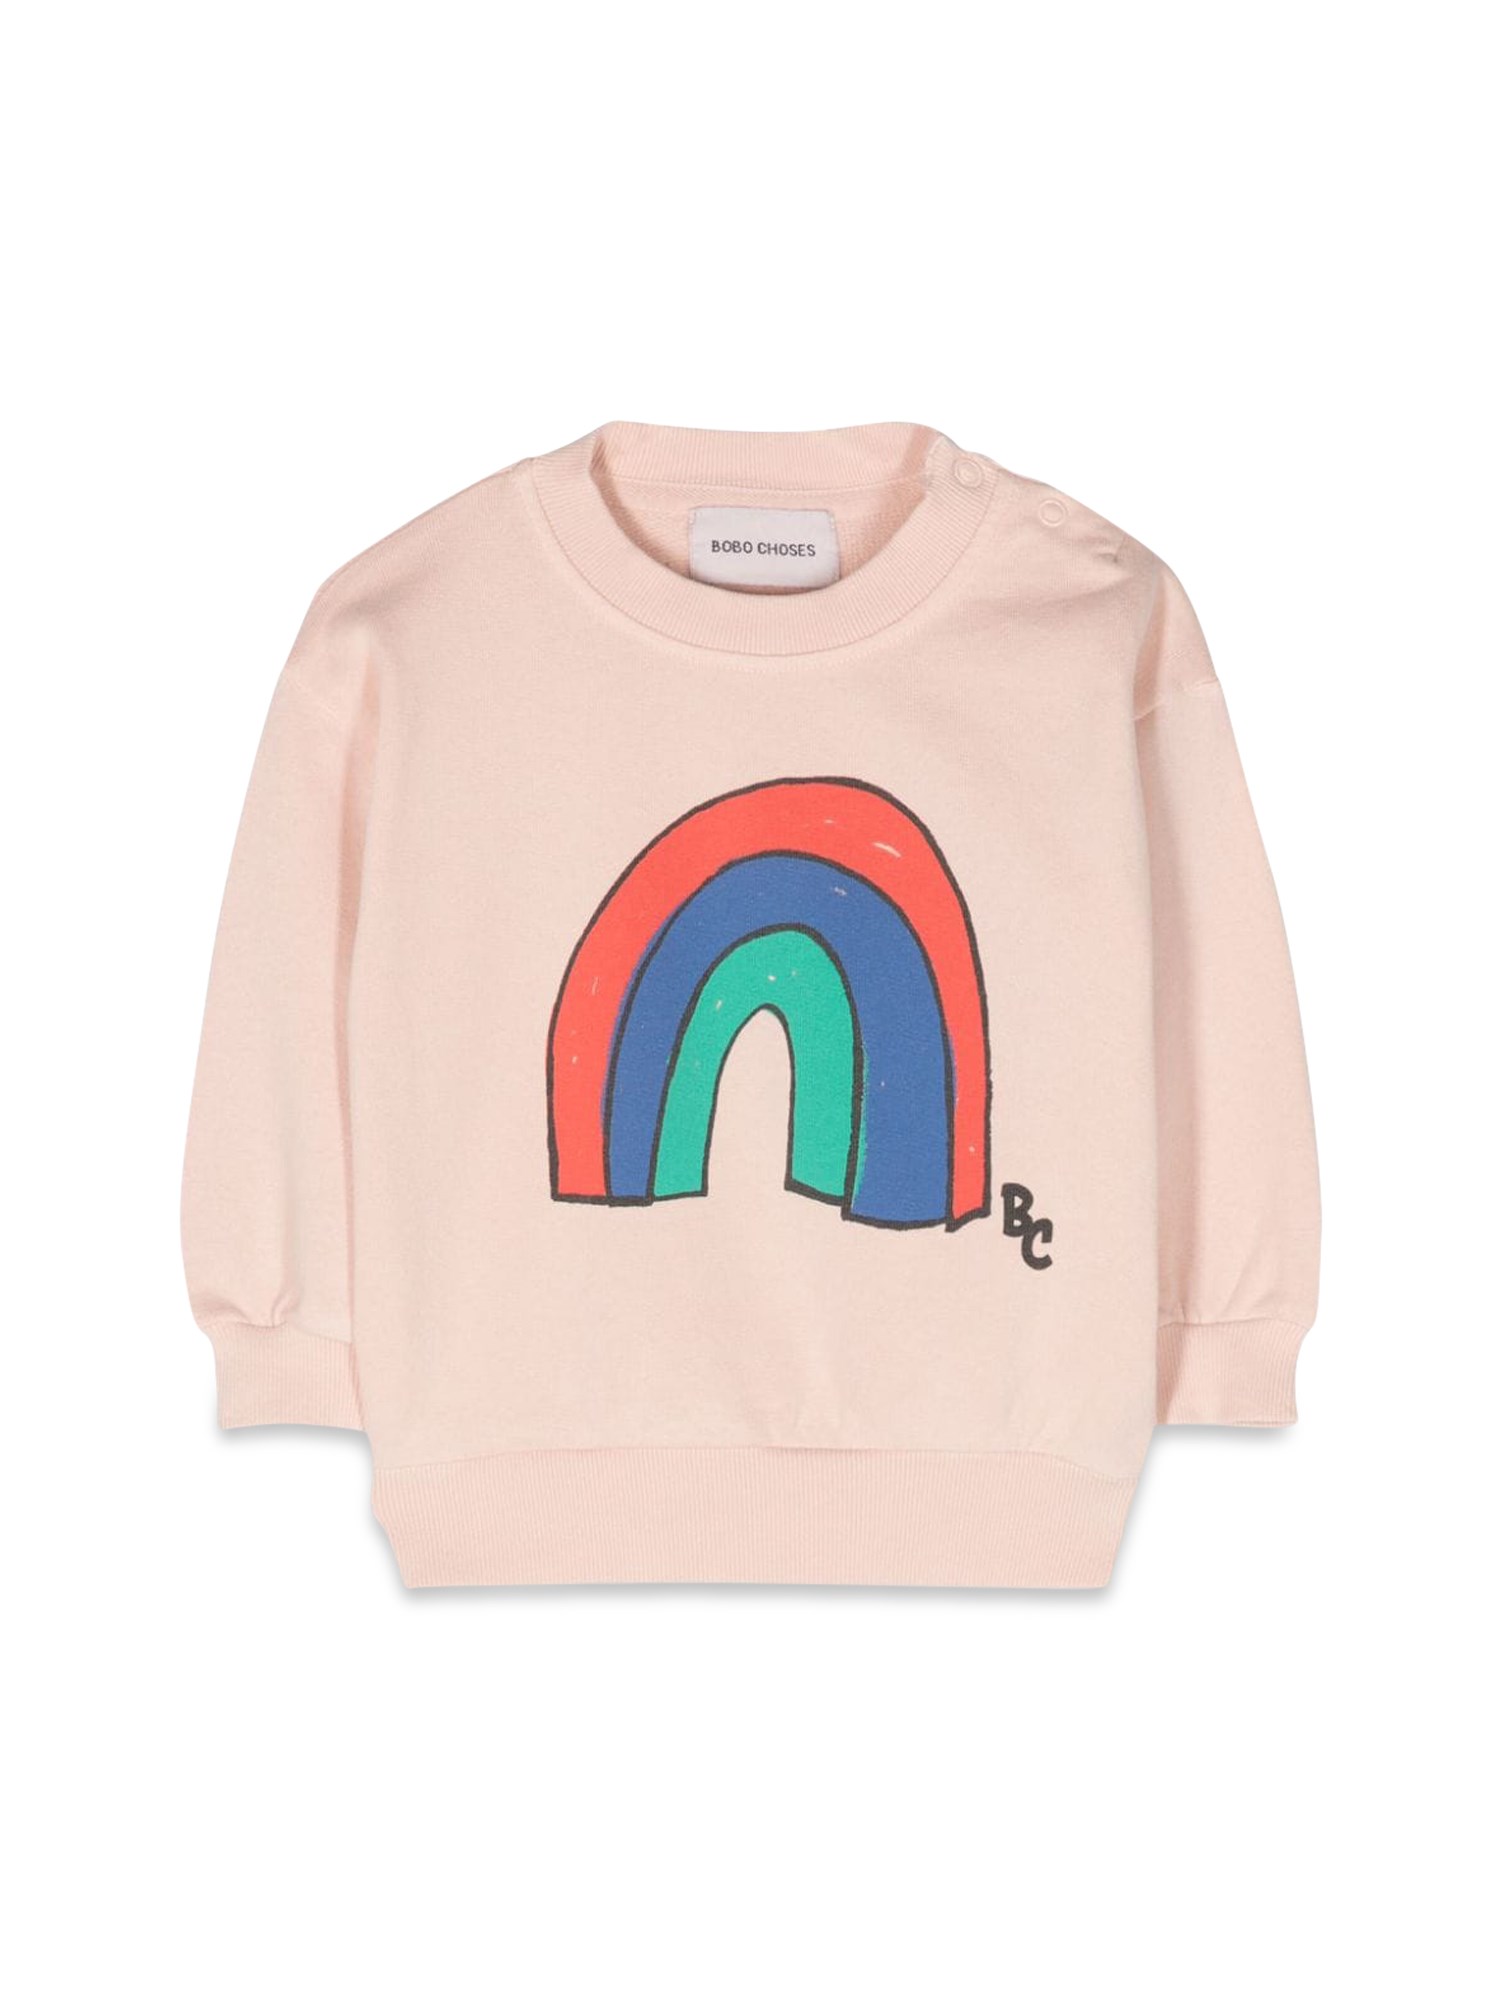 Bobo Choses bobo choses baby rainbow sweatshirt